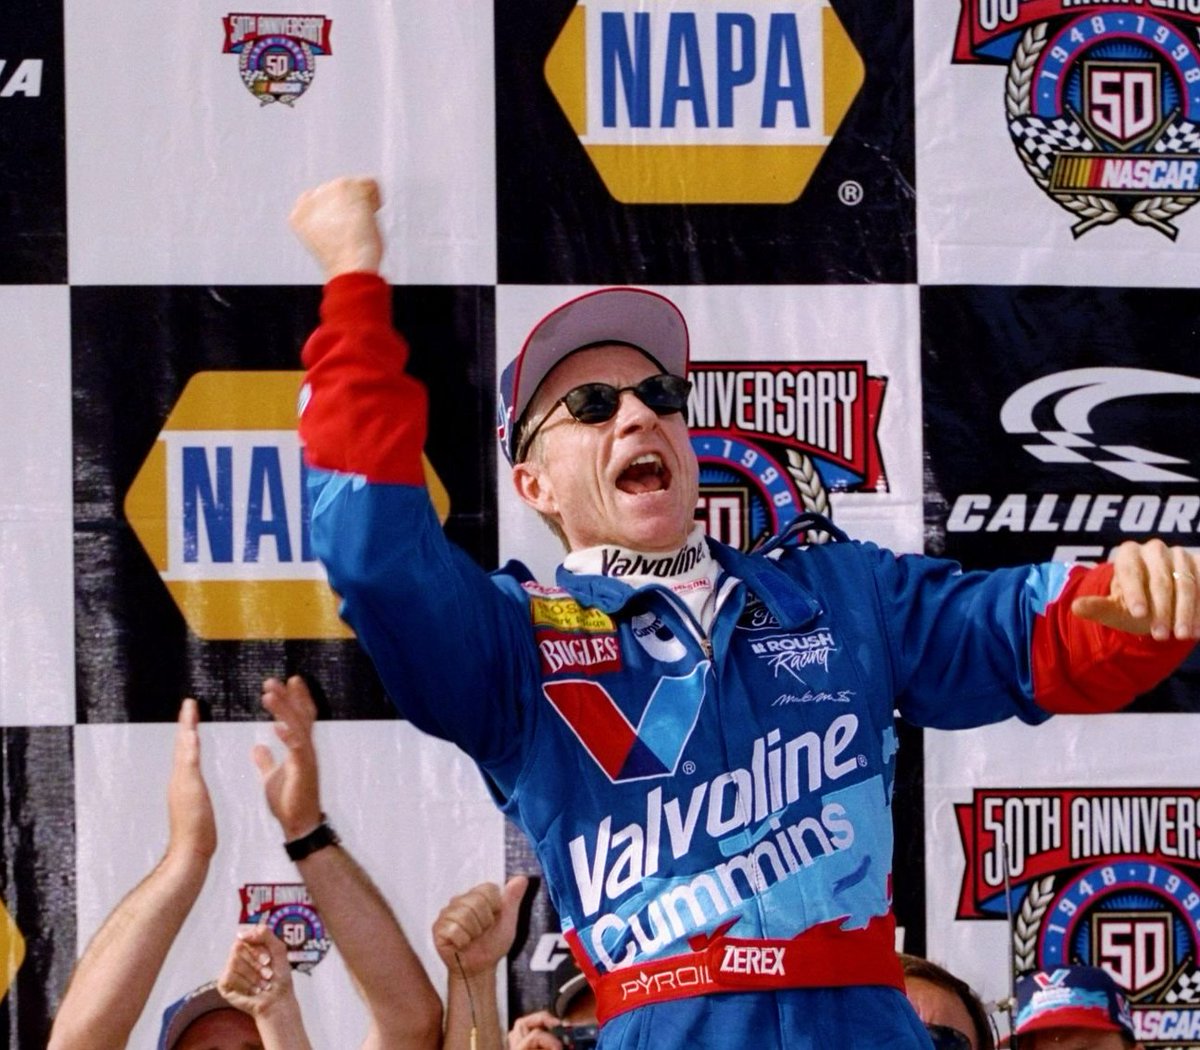 Mark Martin won the 1998 California 500 at Fontana 26 years ago today. 🏁 

#RoushRacing 🏁